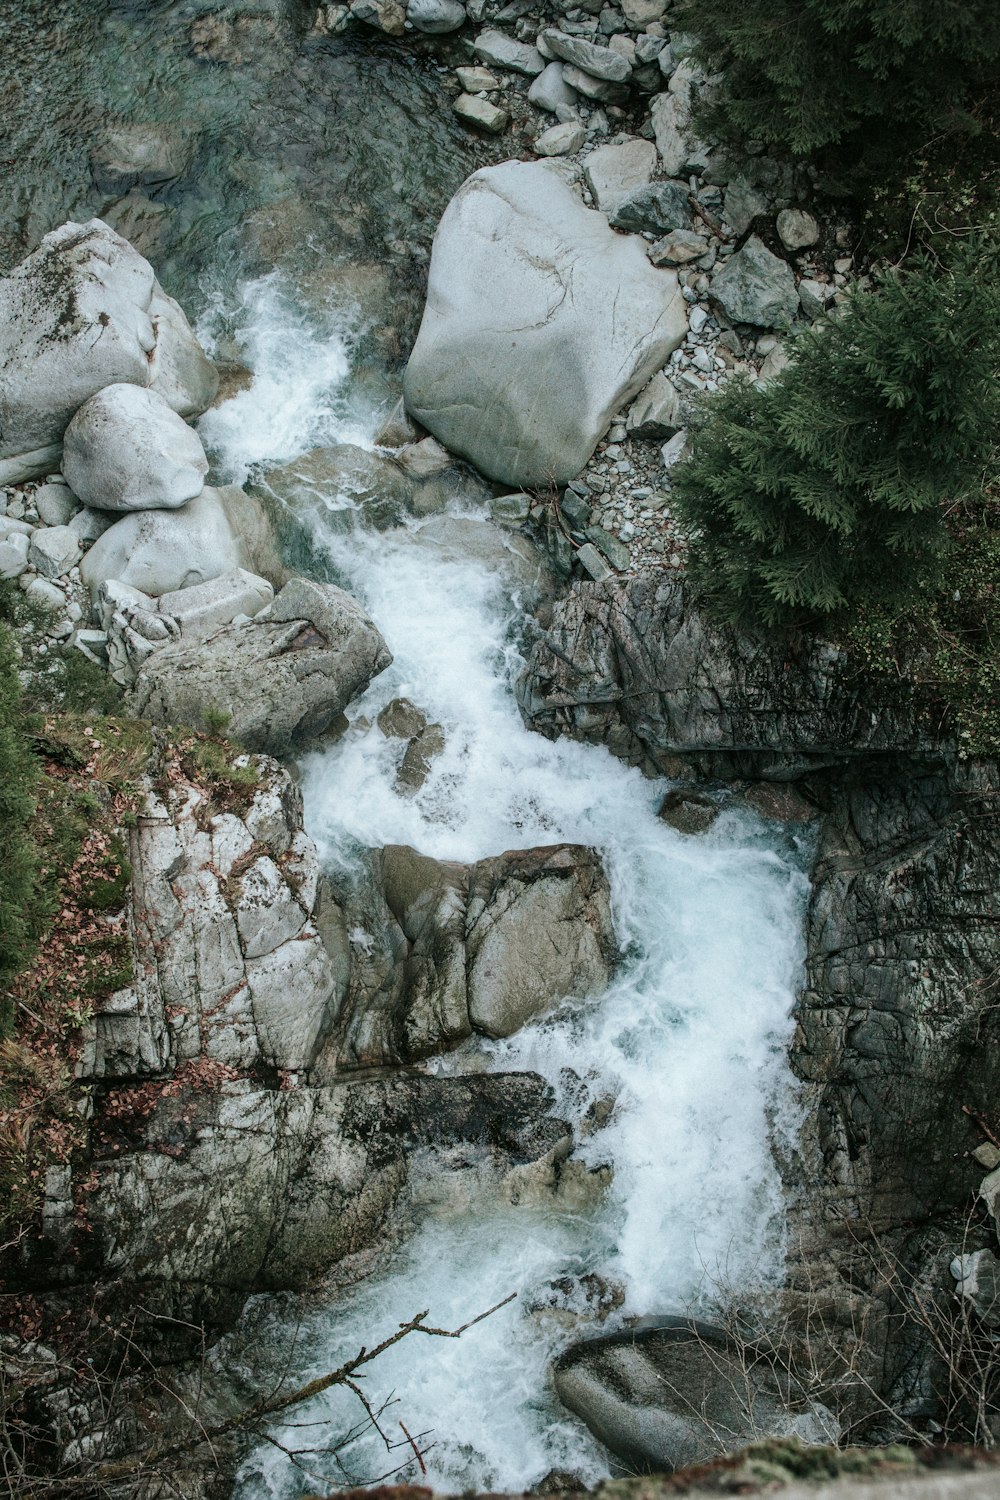 body of water in between rock formations